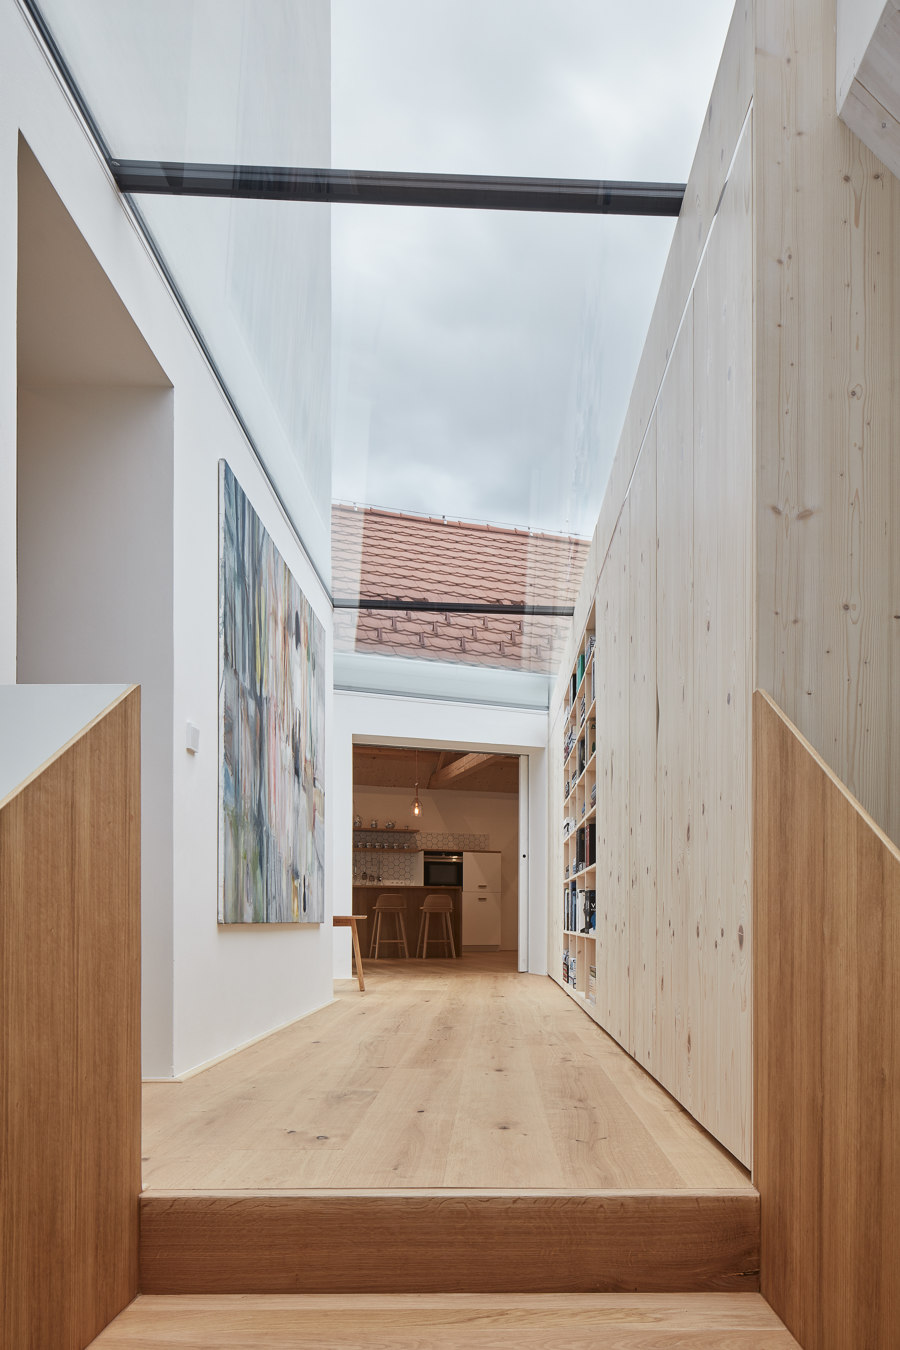 Family house in Jinonice de Atelier 111 architekti | Casas Unifamiliares